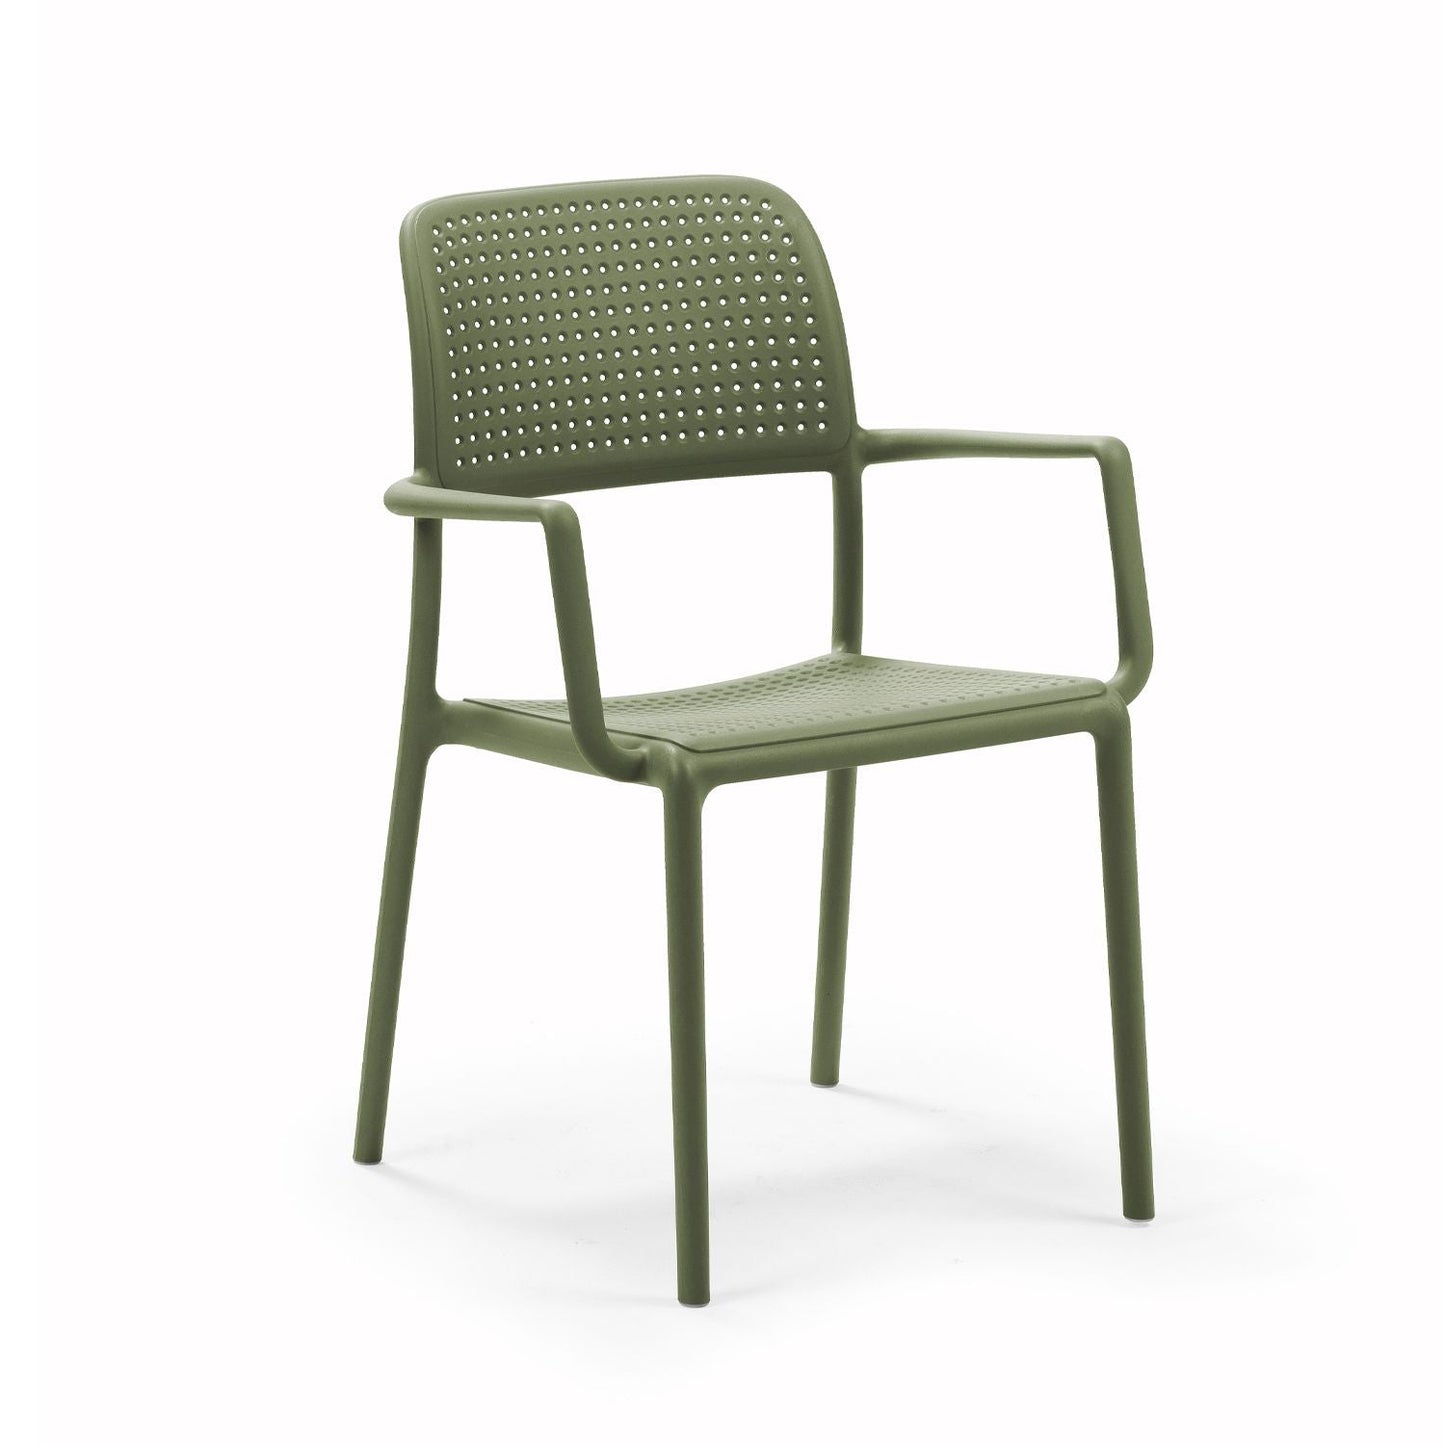 Bora Garden Chair By Nardi - Set Of 6 - Olive